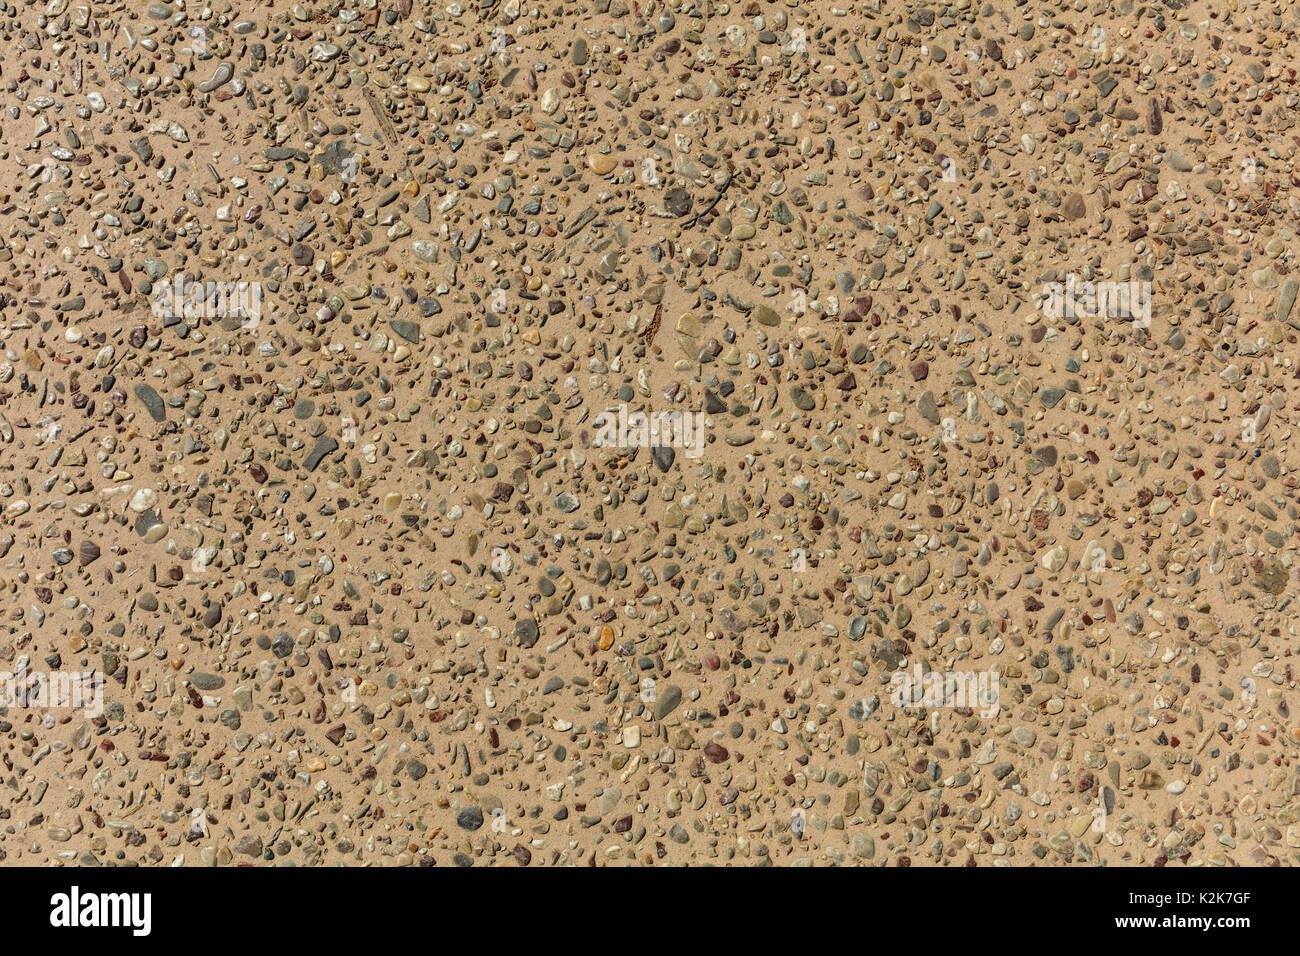 Stone and concrete pavement floor texture background Stock Photo